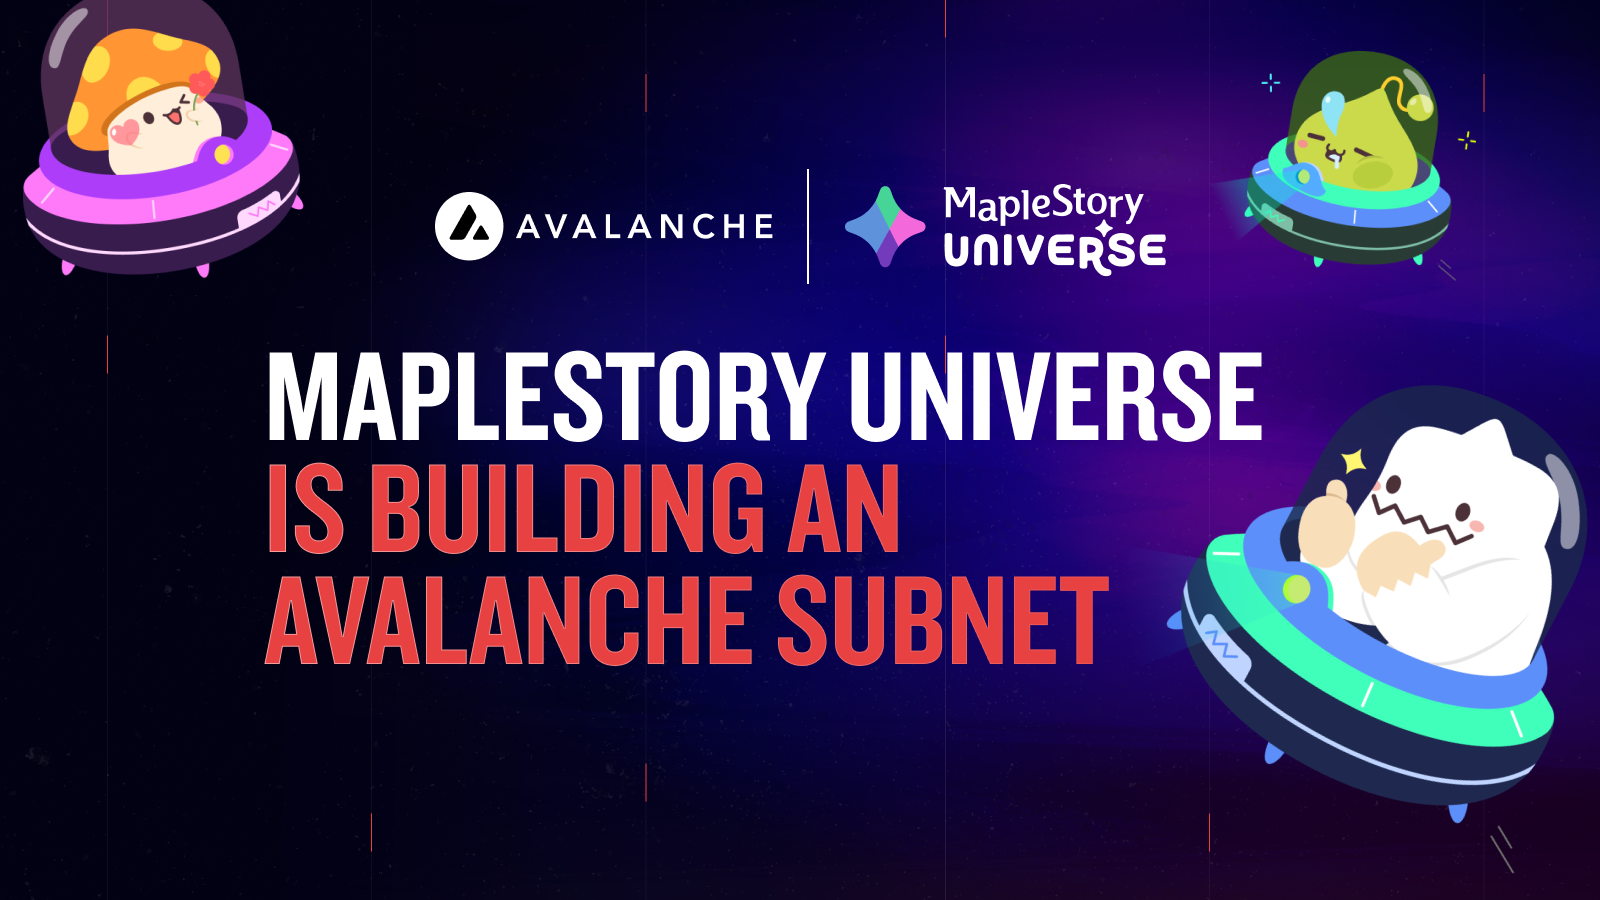 MapleStory Universe's Blockchain Evolution with Avalanche түншлэл